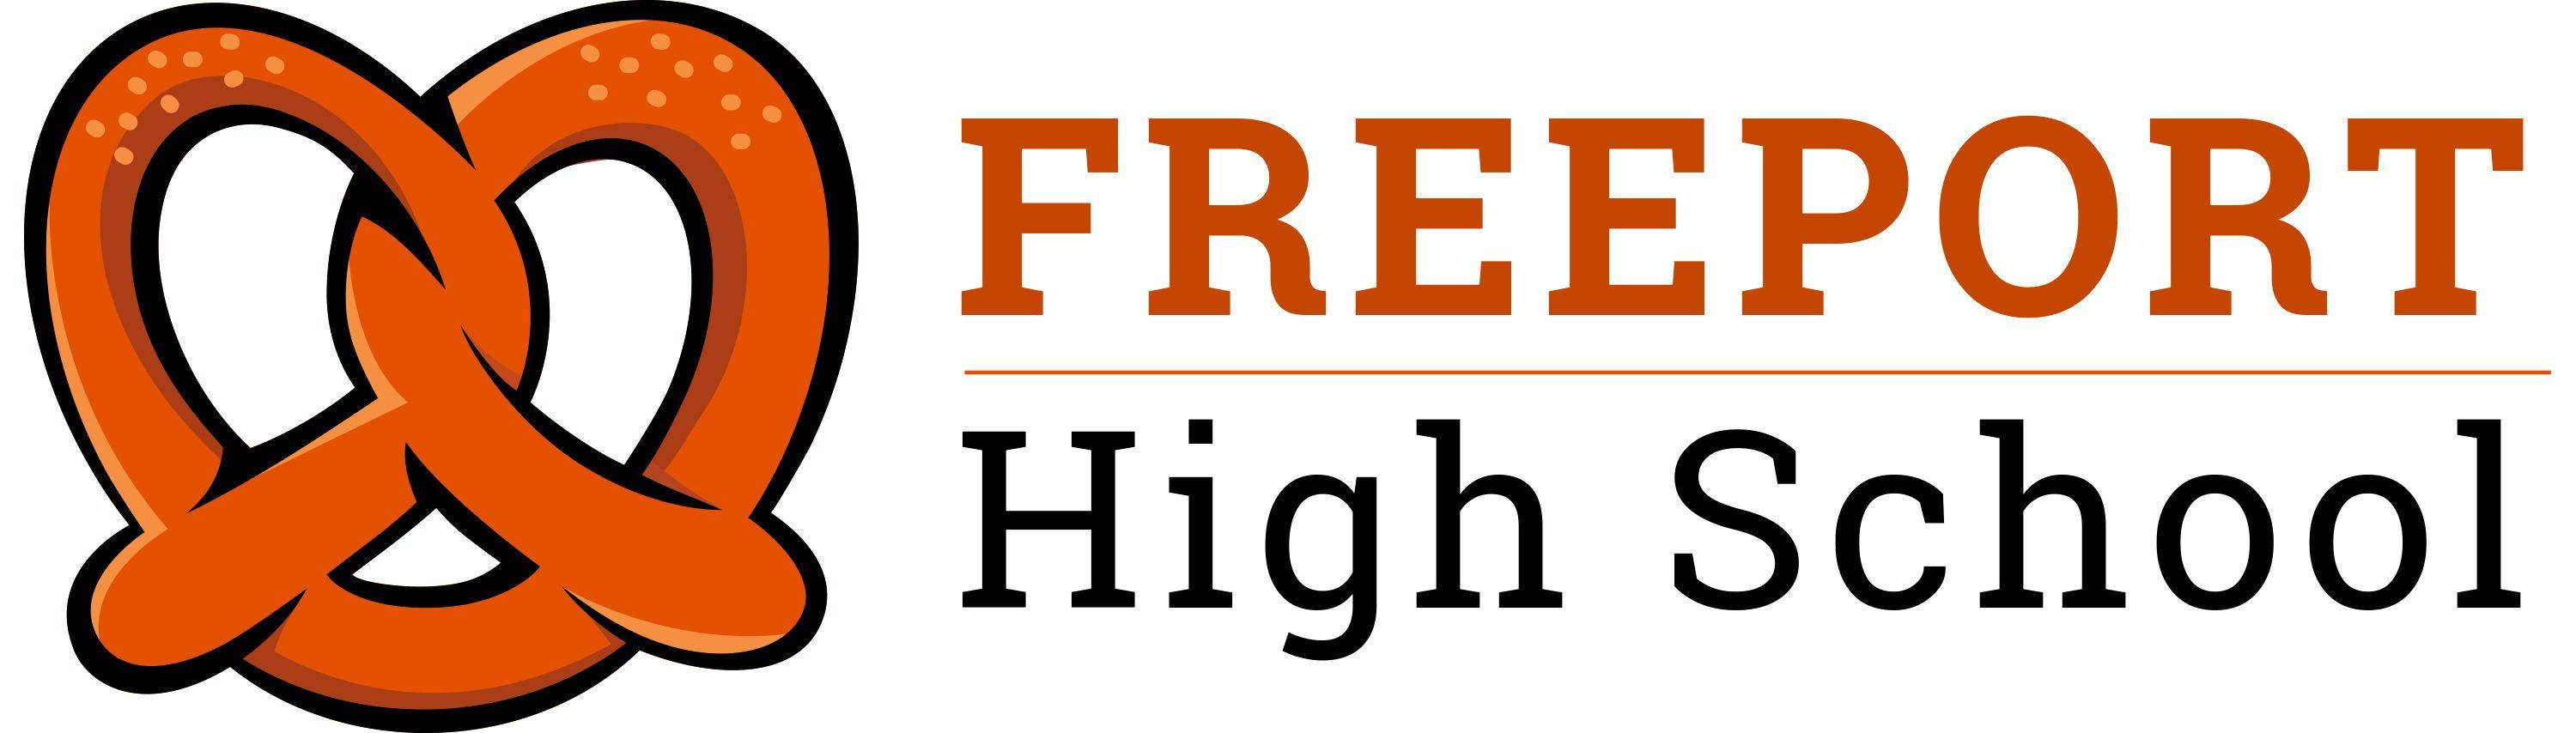 Freeport Logo - Freeport High School / Homepage